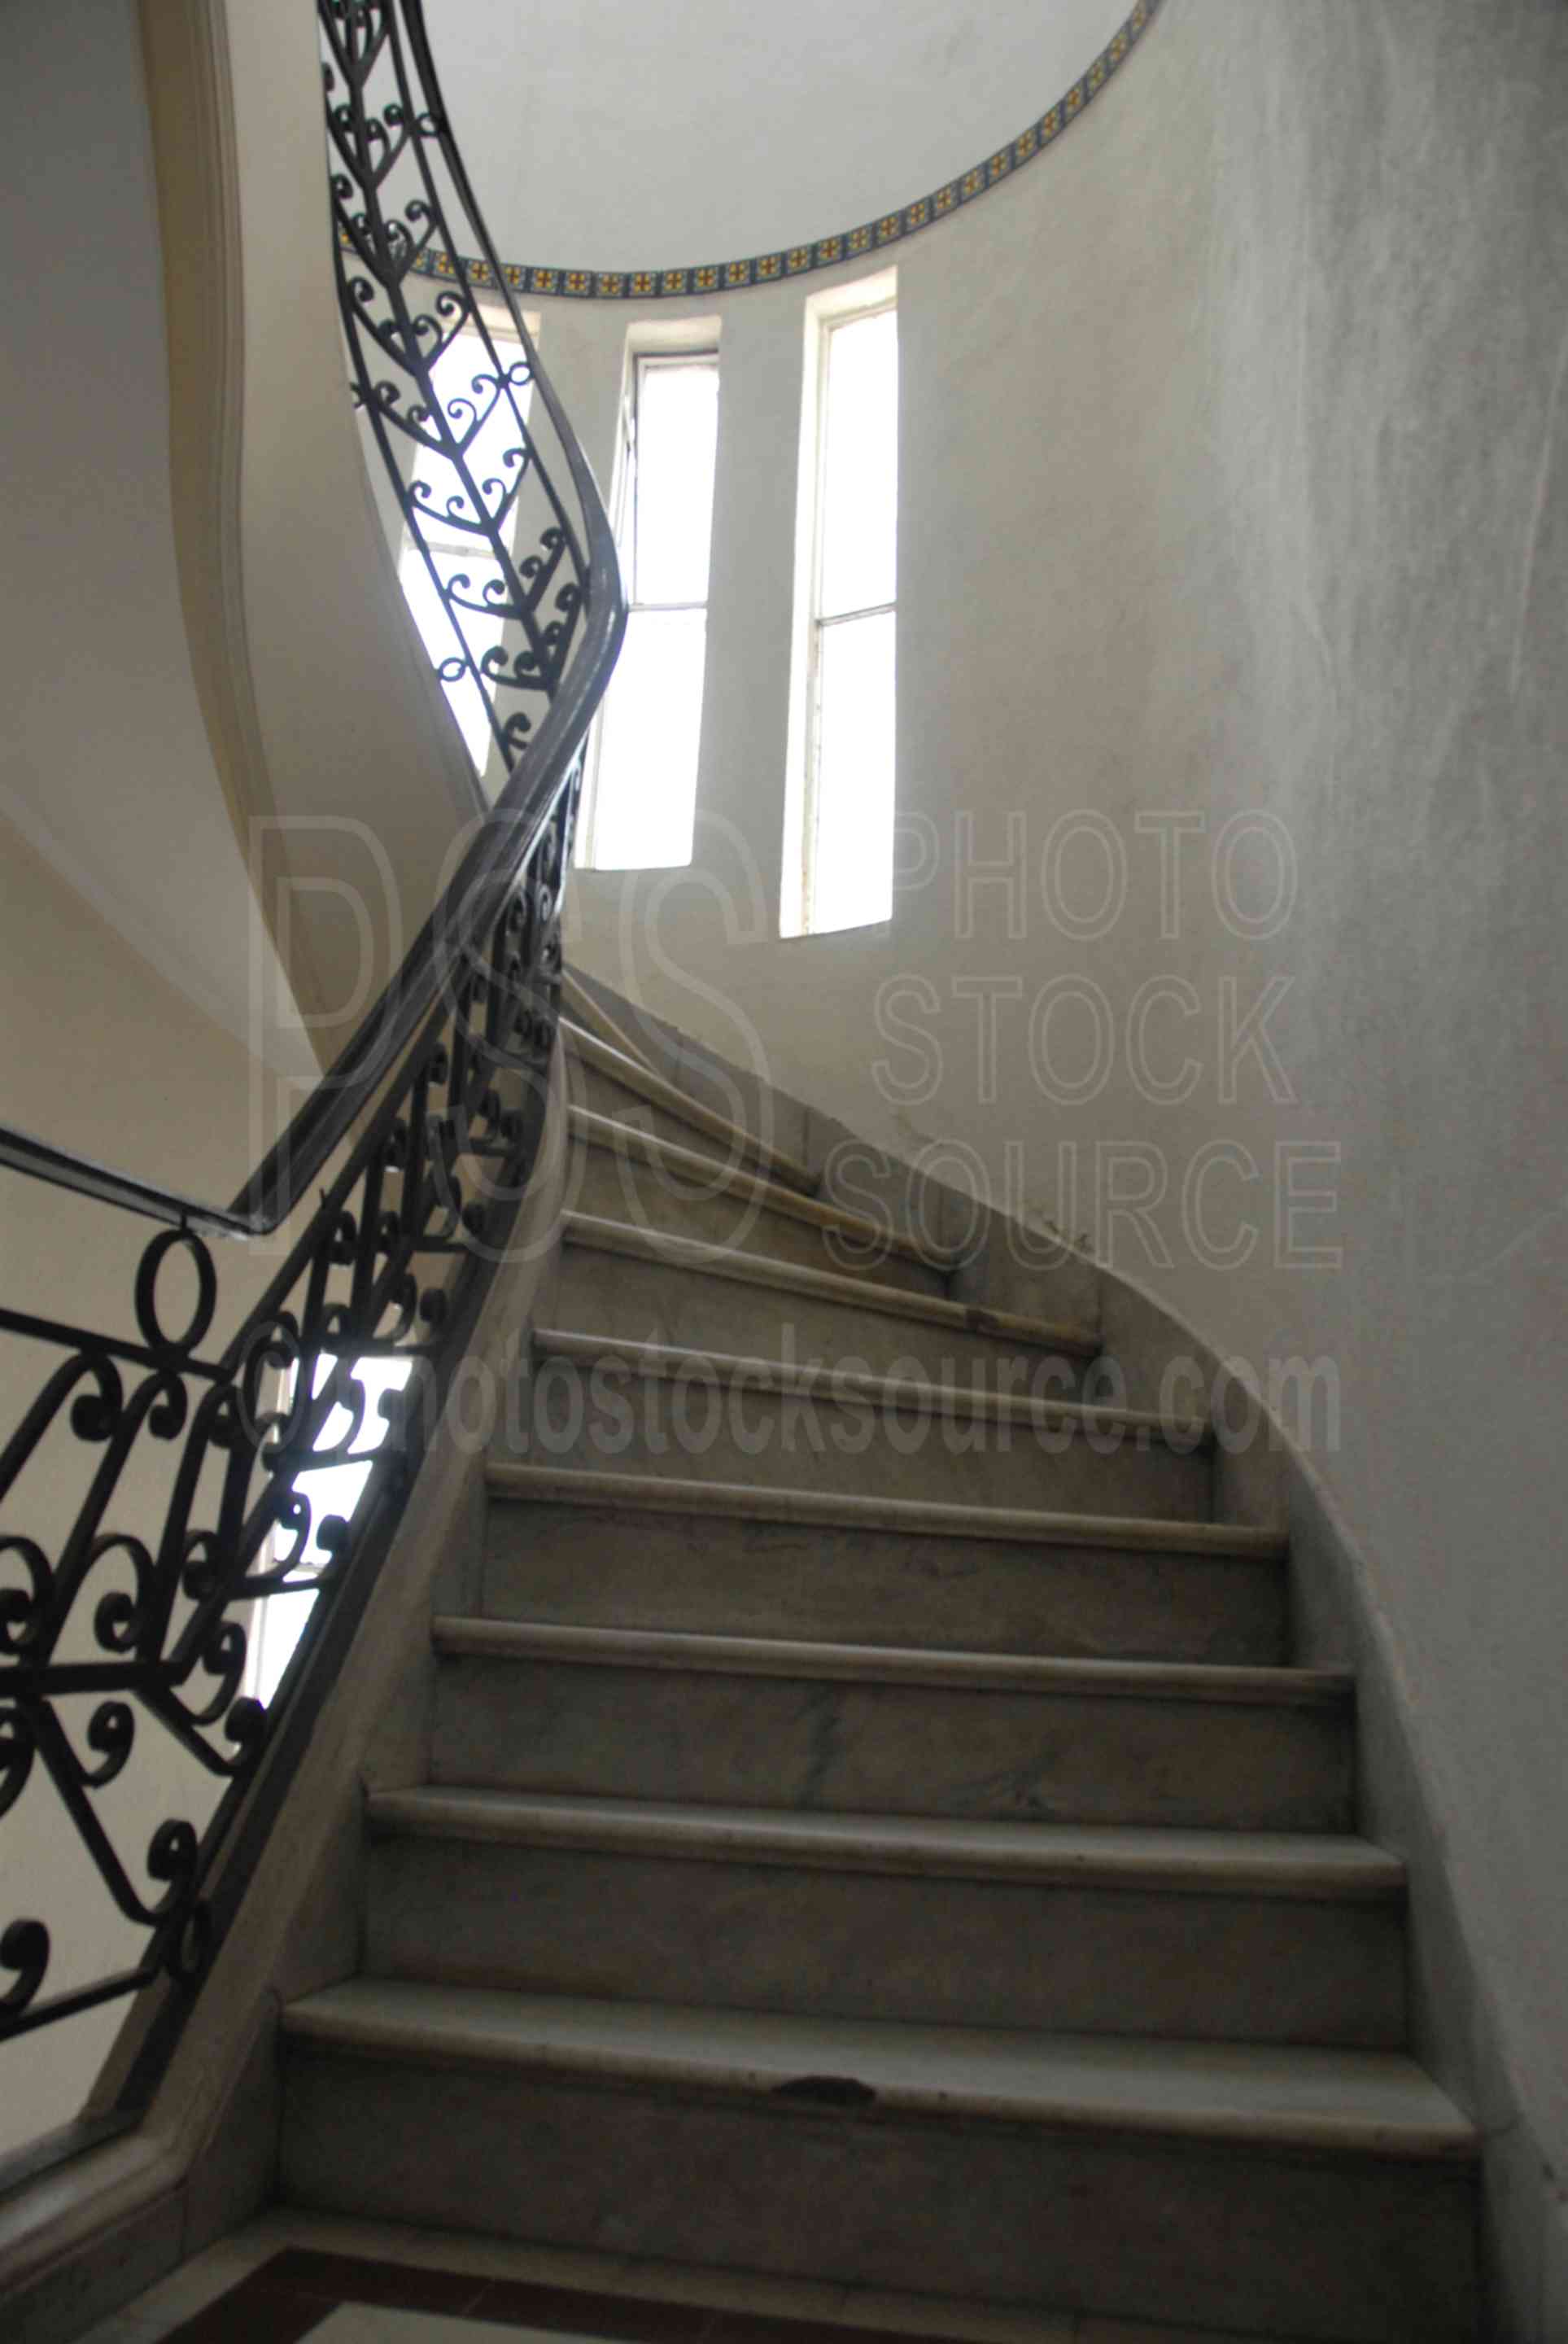 Palacio Barolo,historic,stairs,staircase,art deco,architecture